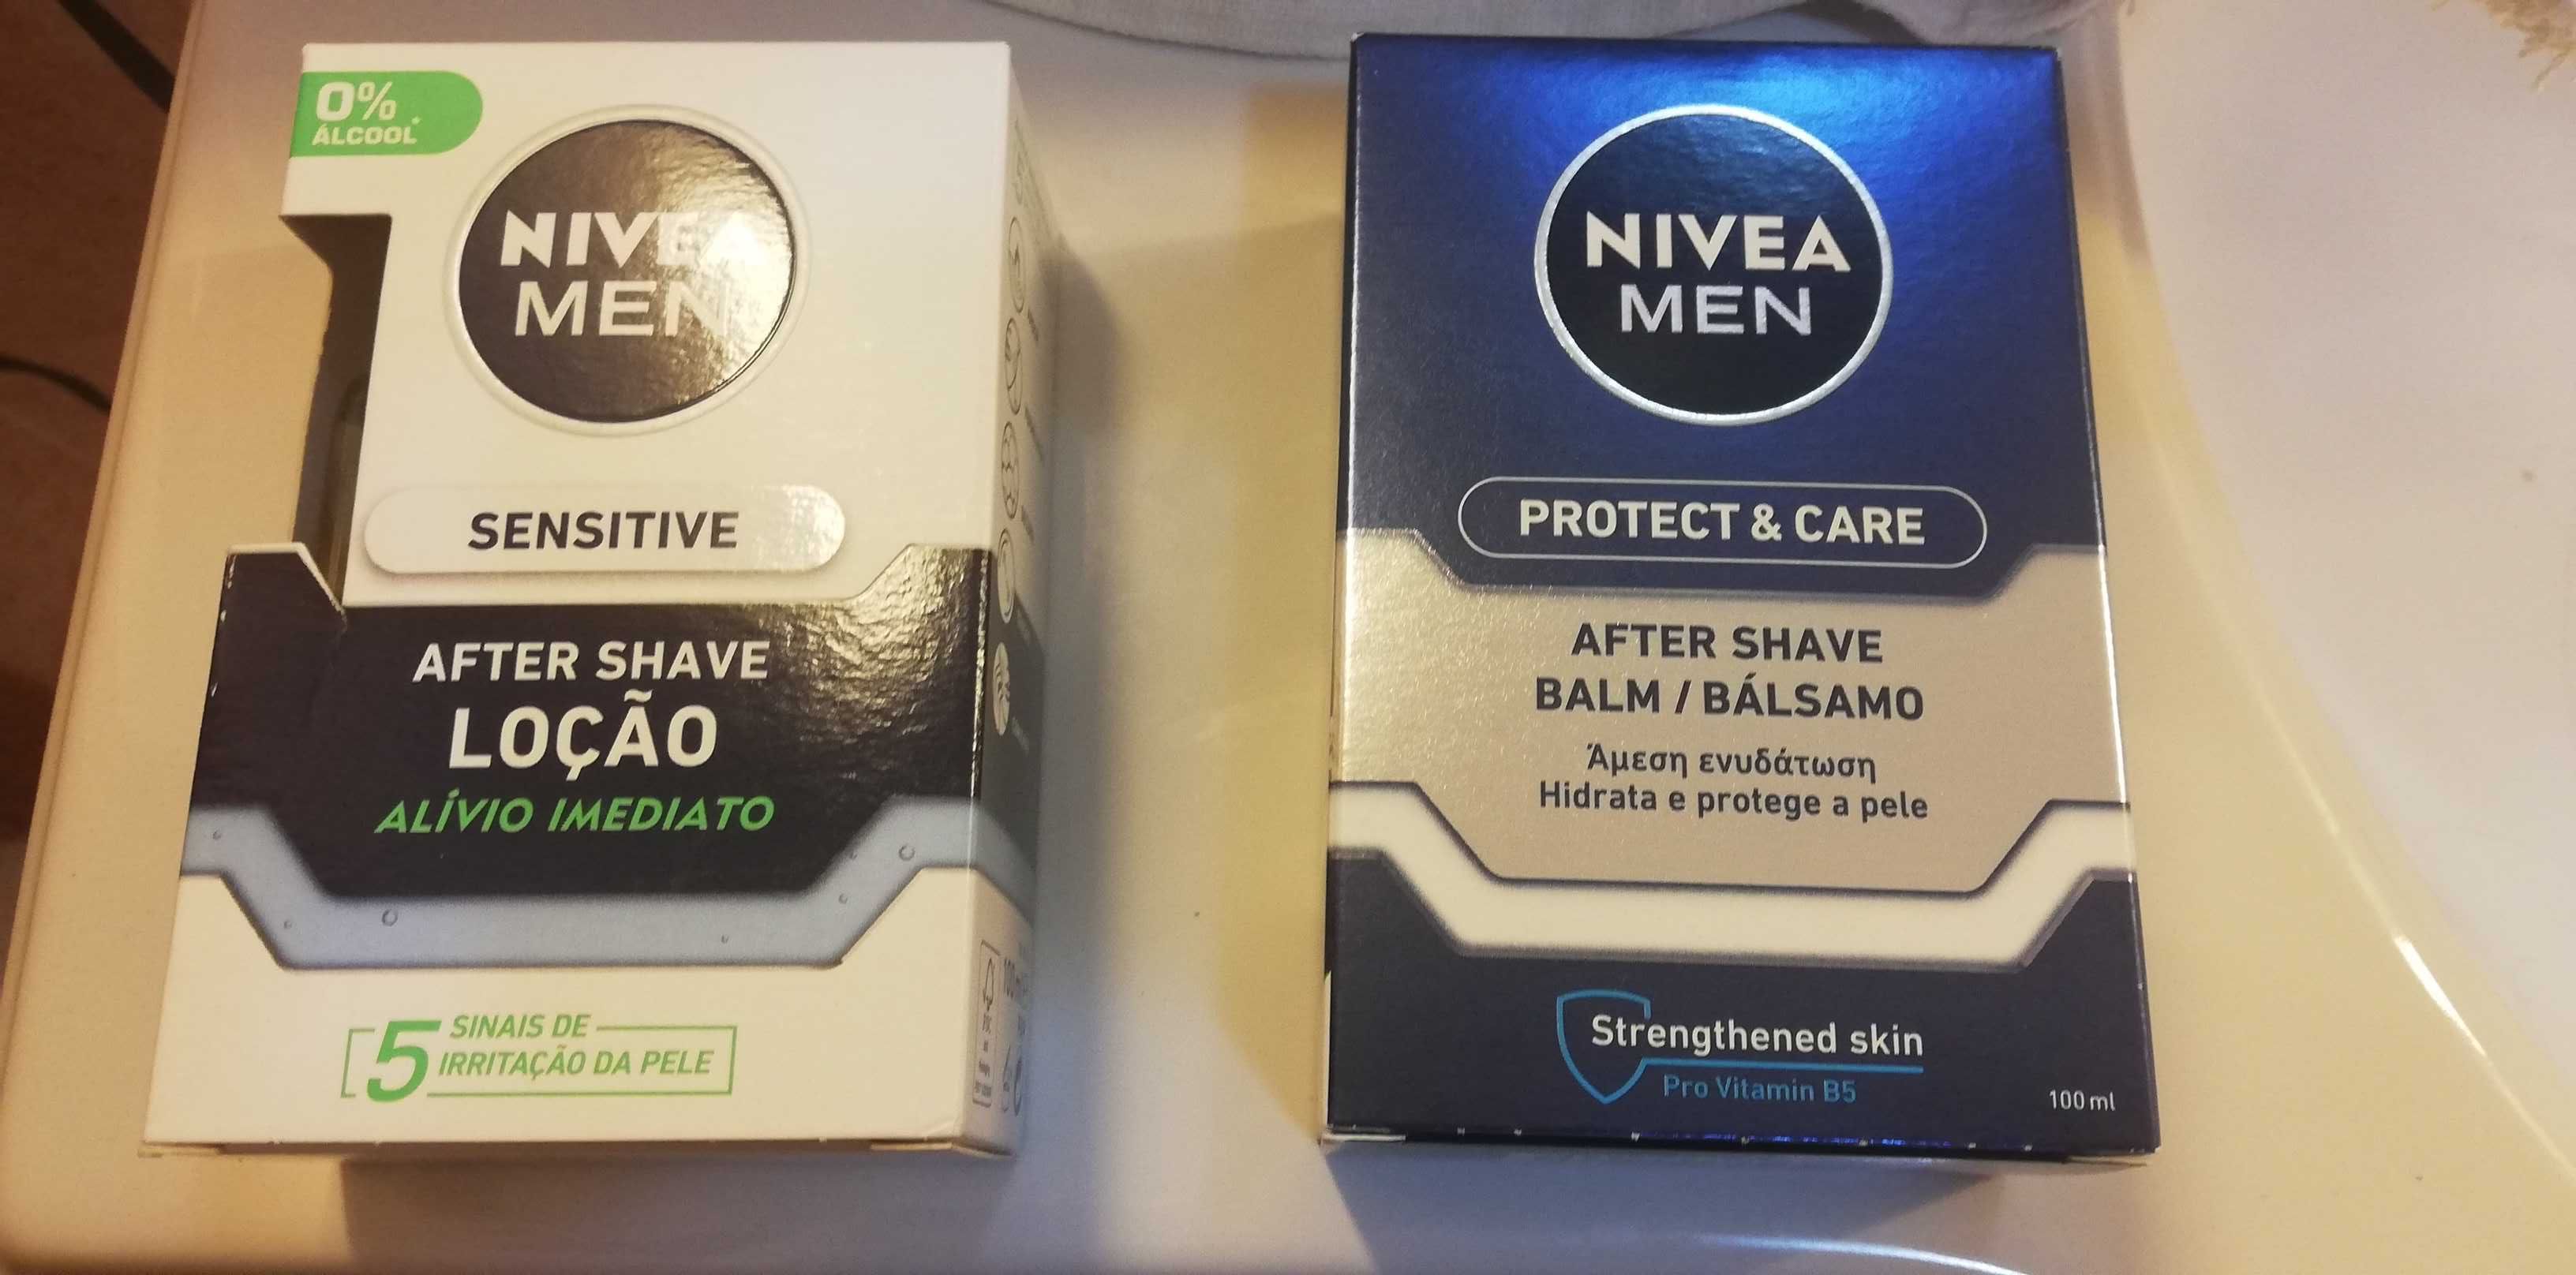 After shave / balsamo - creme depois da barba - Nivea - Sensitive etc